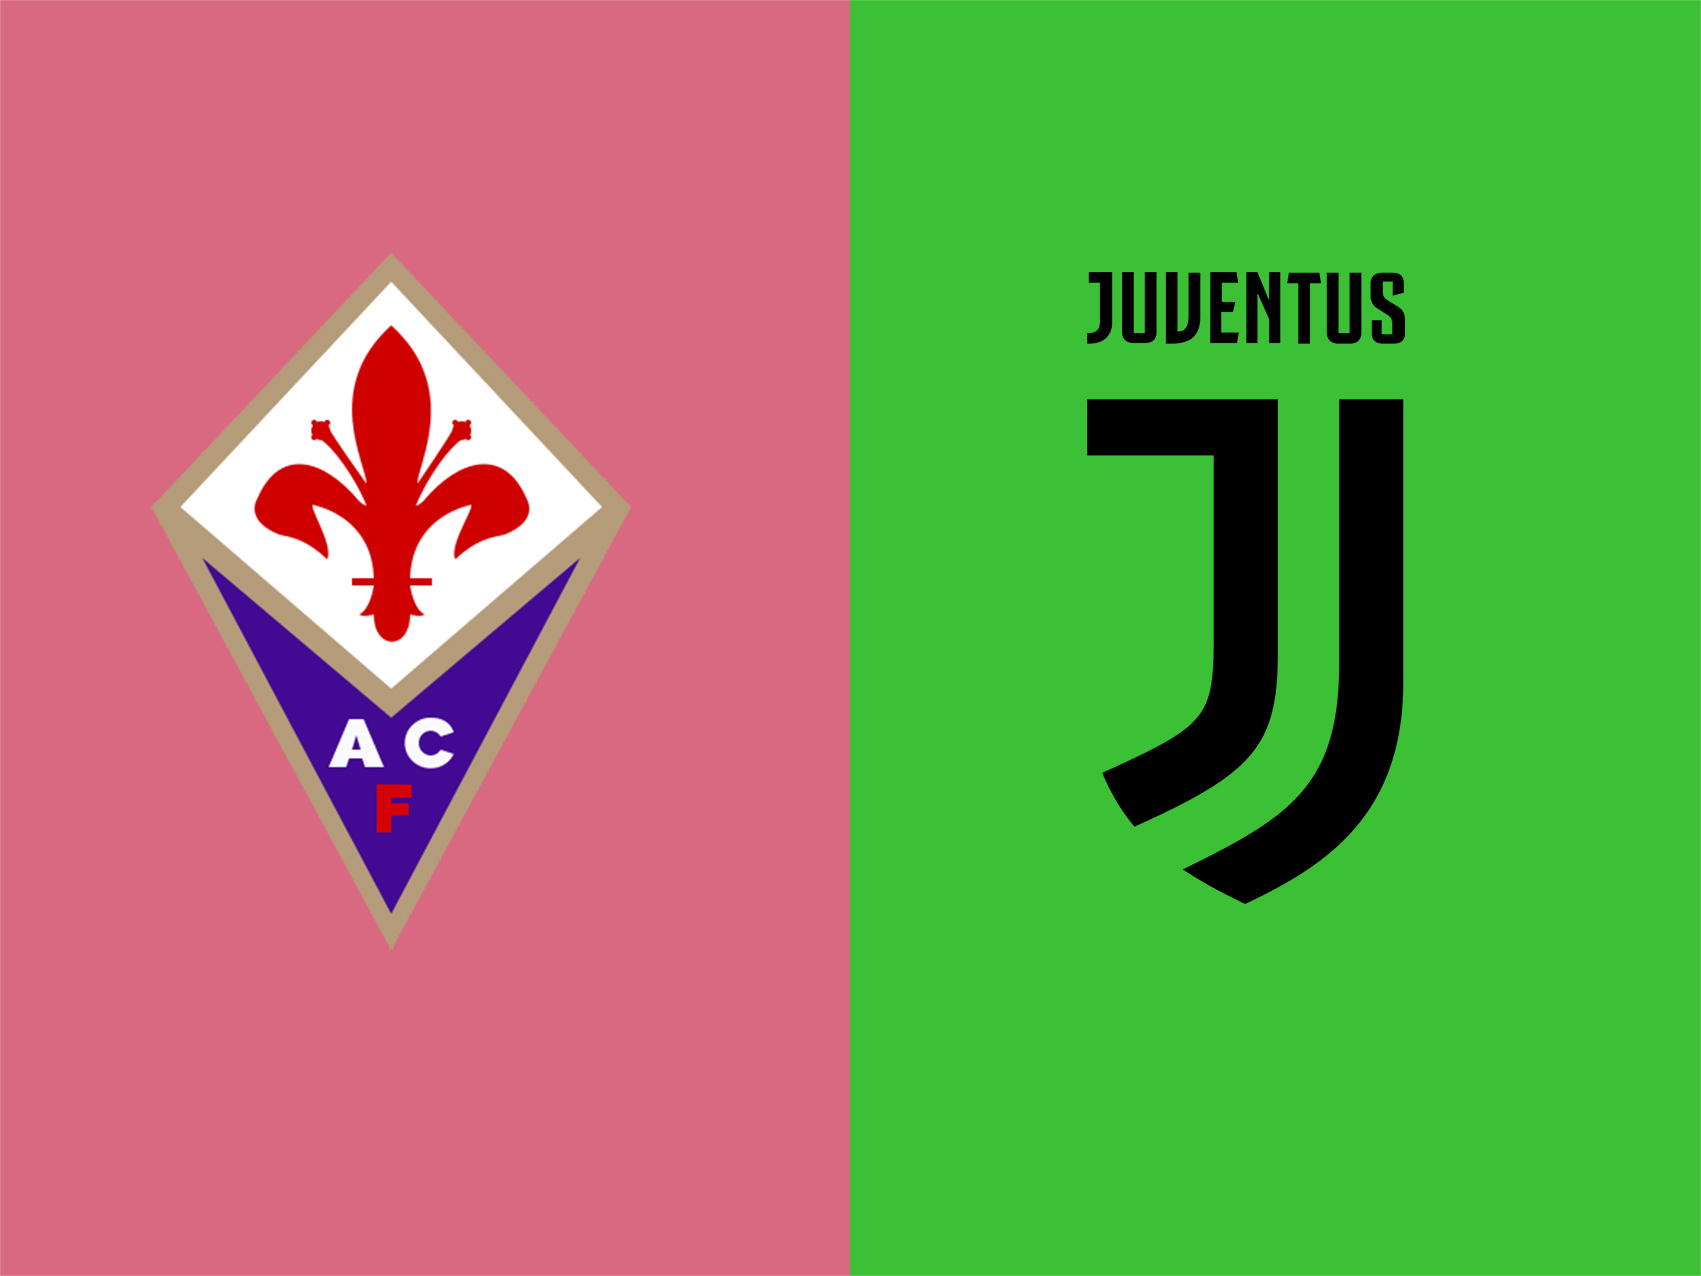 soi-keo-ca-cuoc-bong-da-ngay-14-9-Fiorentina-vs-Juventus-do-it-thang-do-nhieu-b9